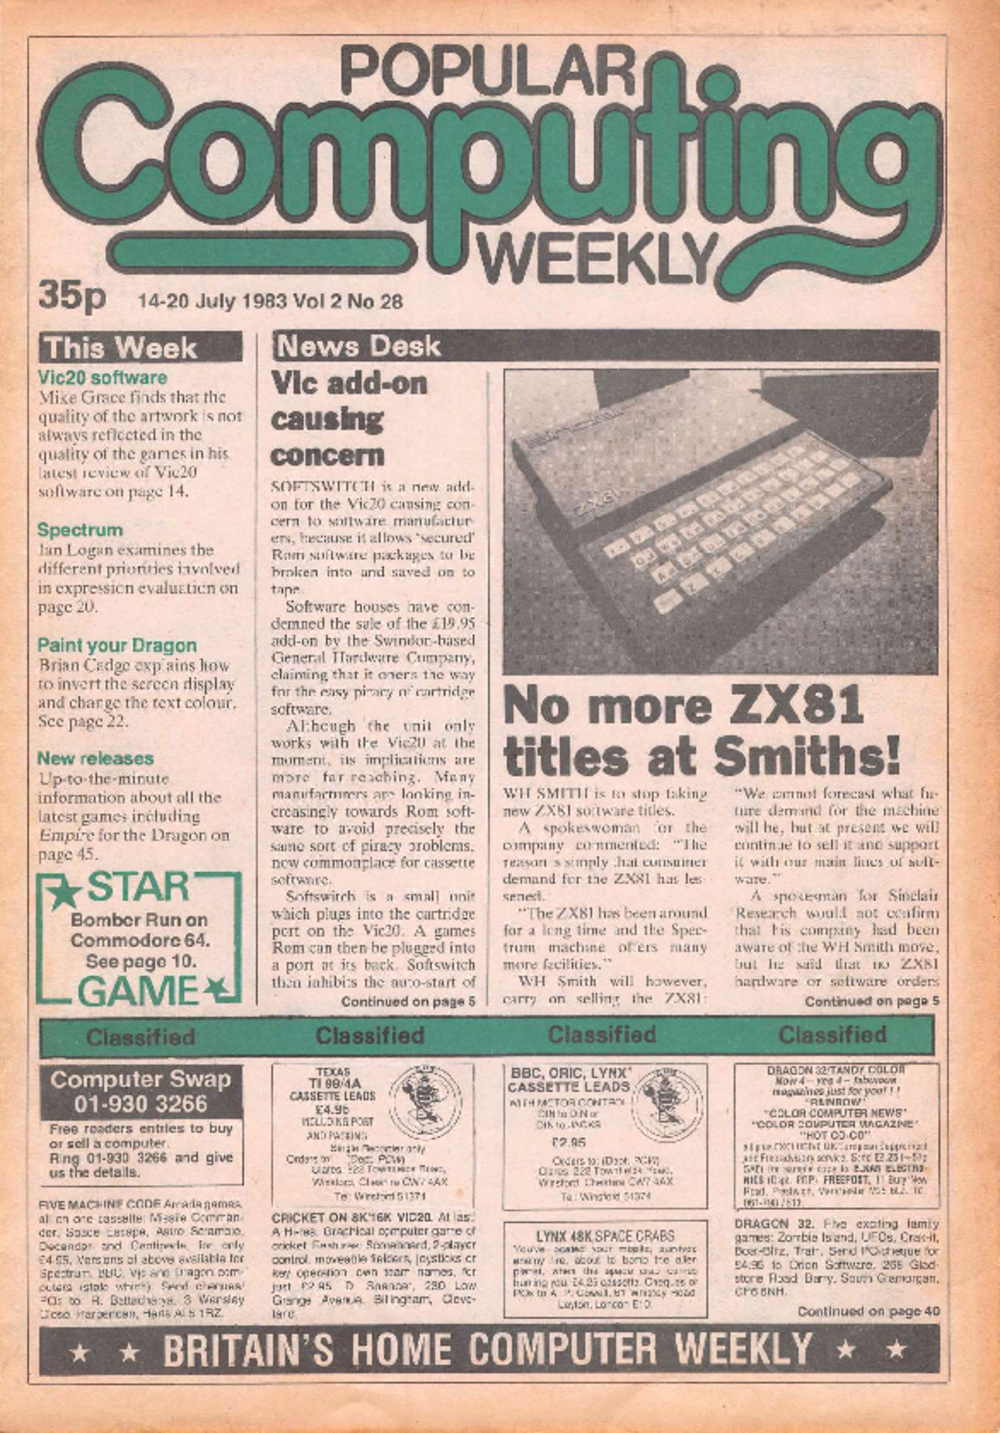 Article: Popular Computing Weekly Vol 2 No 28 - 14-20 July 1983